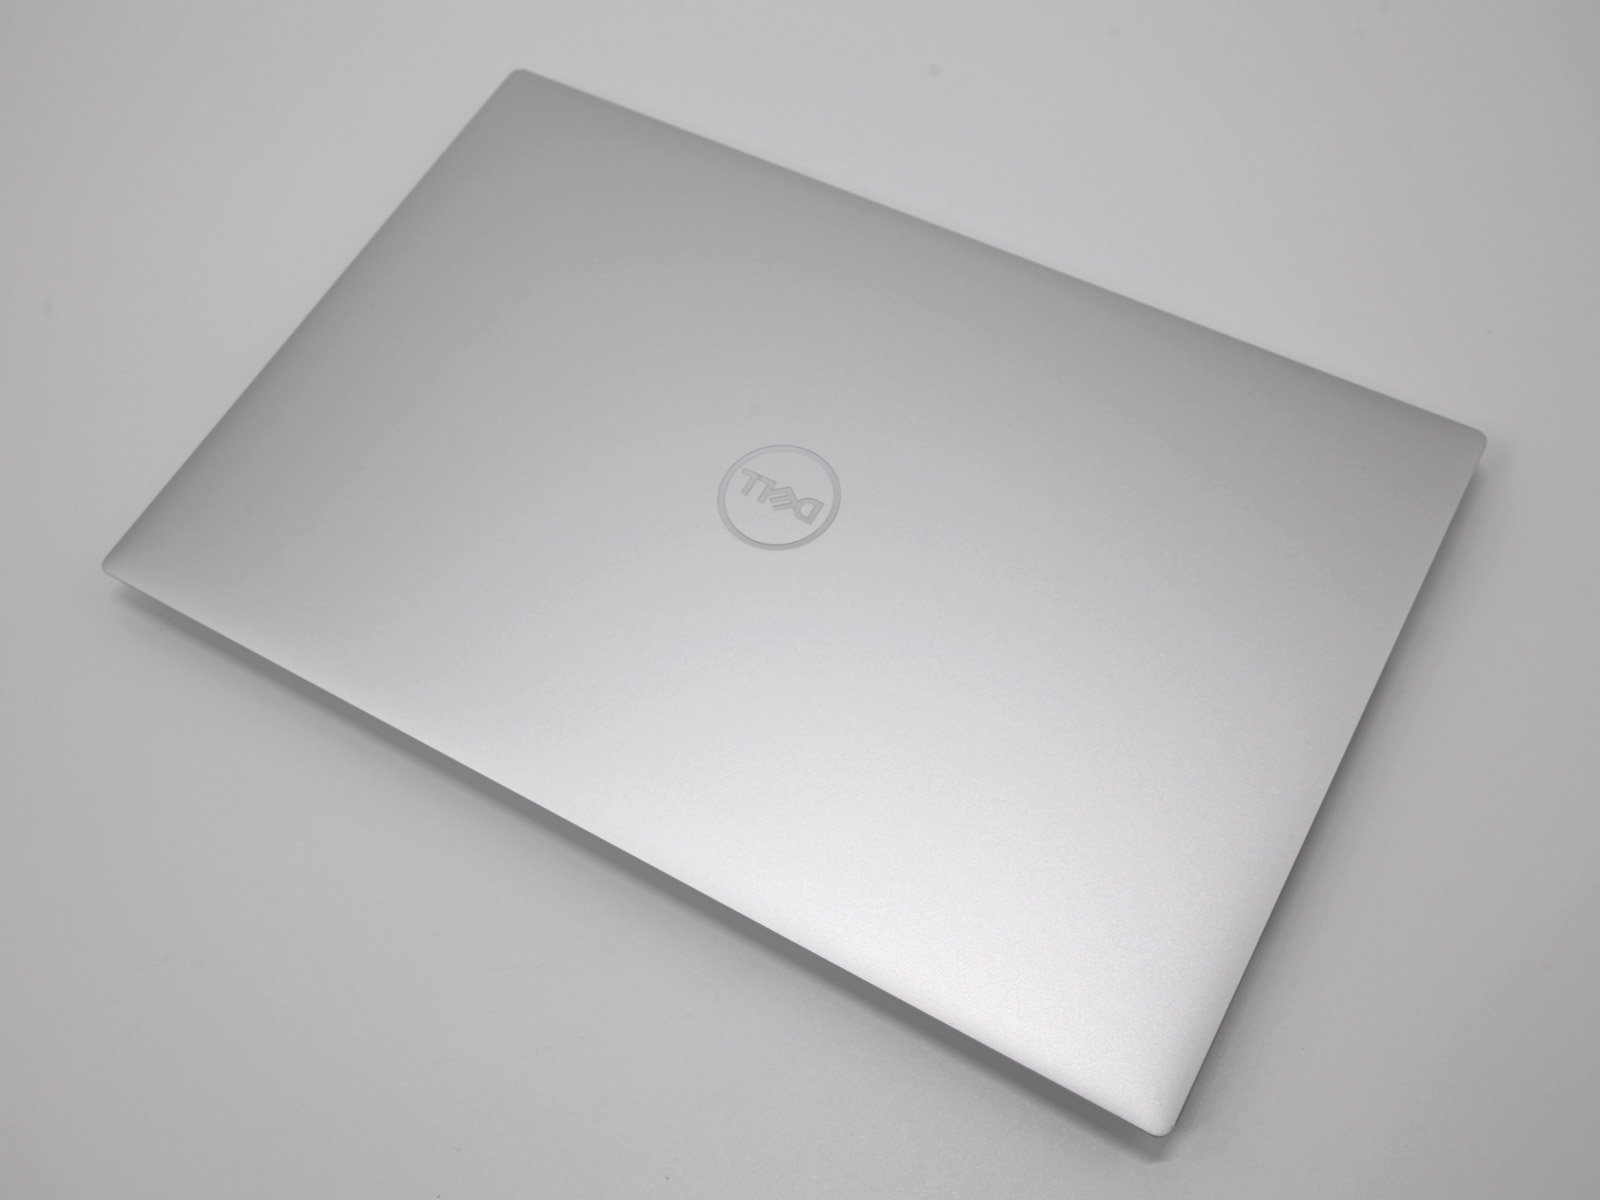 Dell XPS 15 9500 Laptop: Core i7-10750H, GTX 1650Ti, 1TB SSD, 16GB RAM, Warranty - CruiseTech